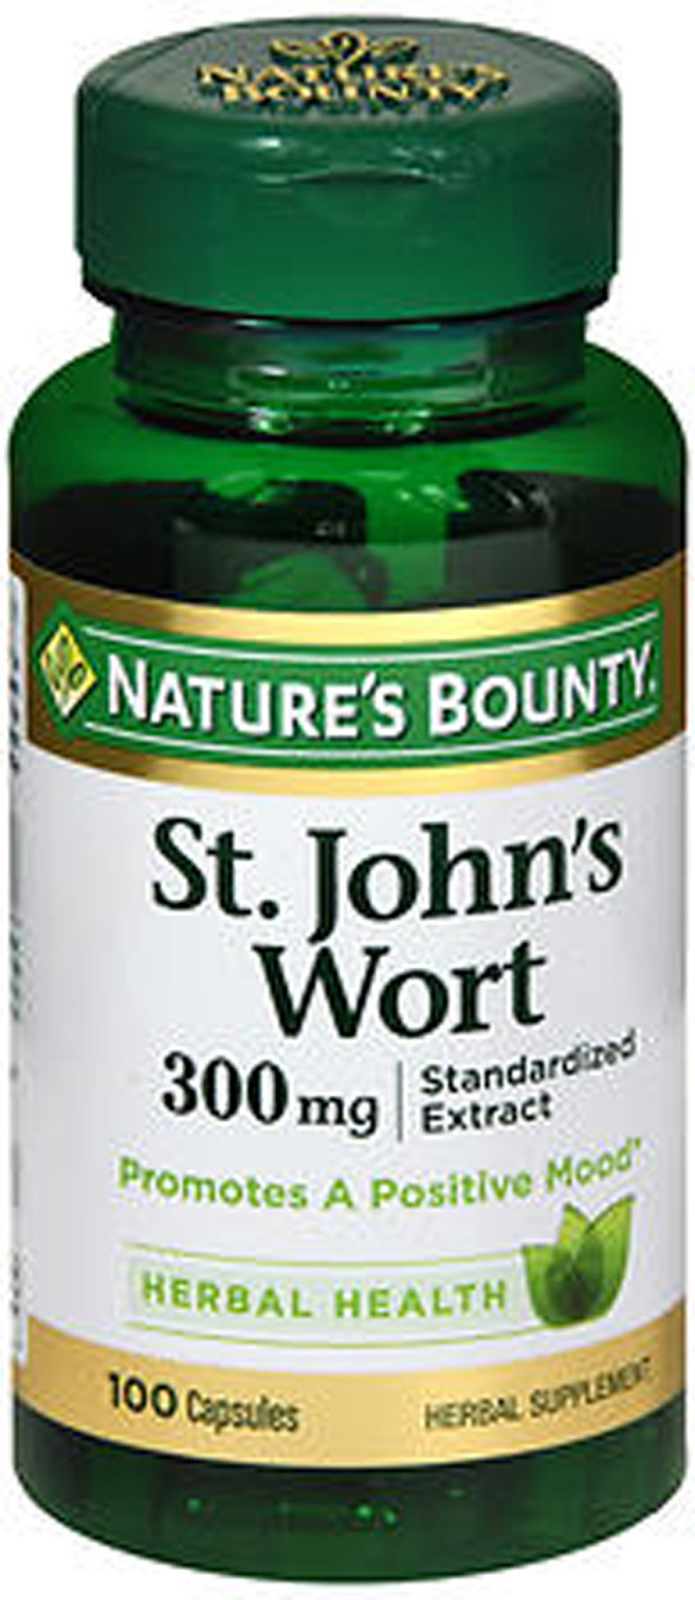 Nature's Bounty St John's Wort supplements